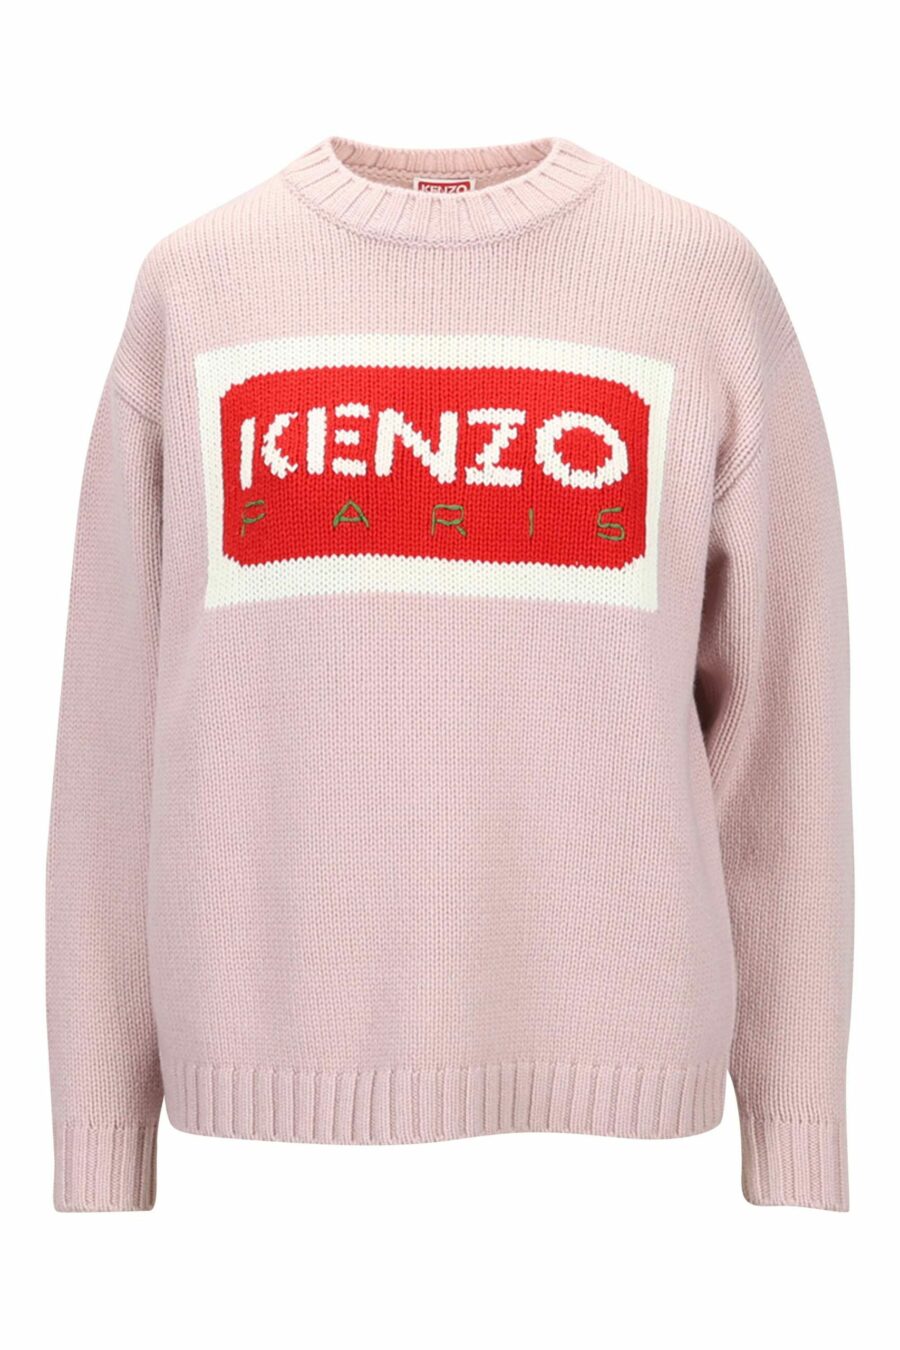 Jersey rosa claro con maxilogo "kenzo paris" - 3612230530331 scaled